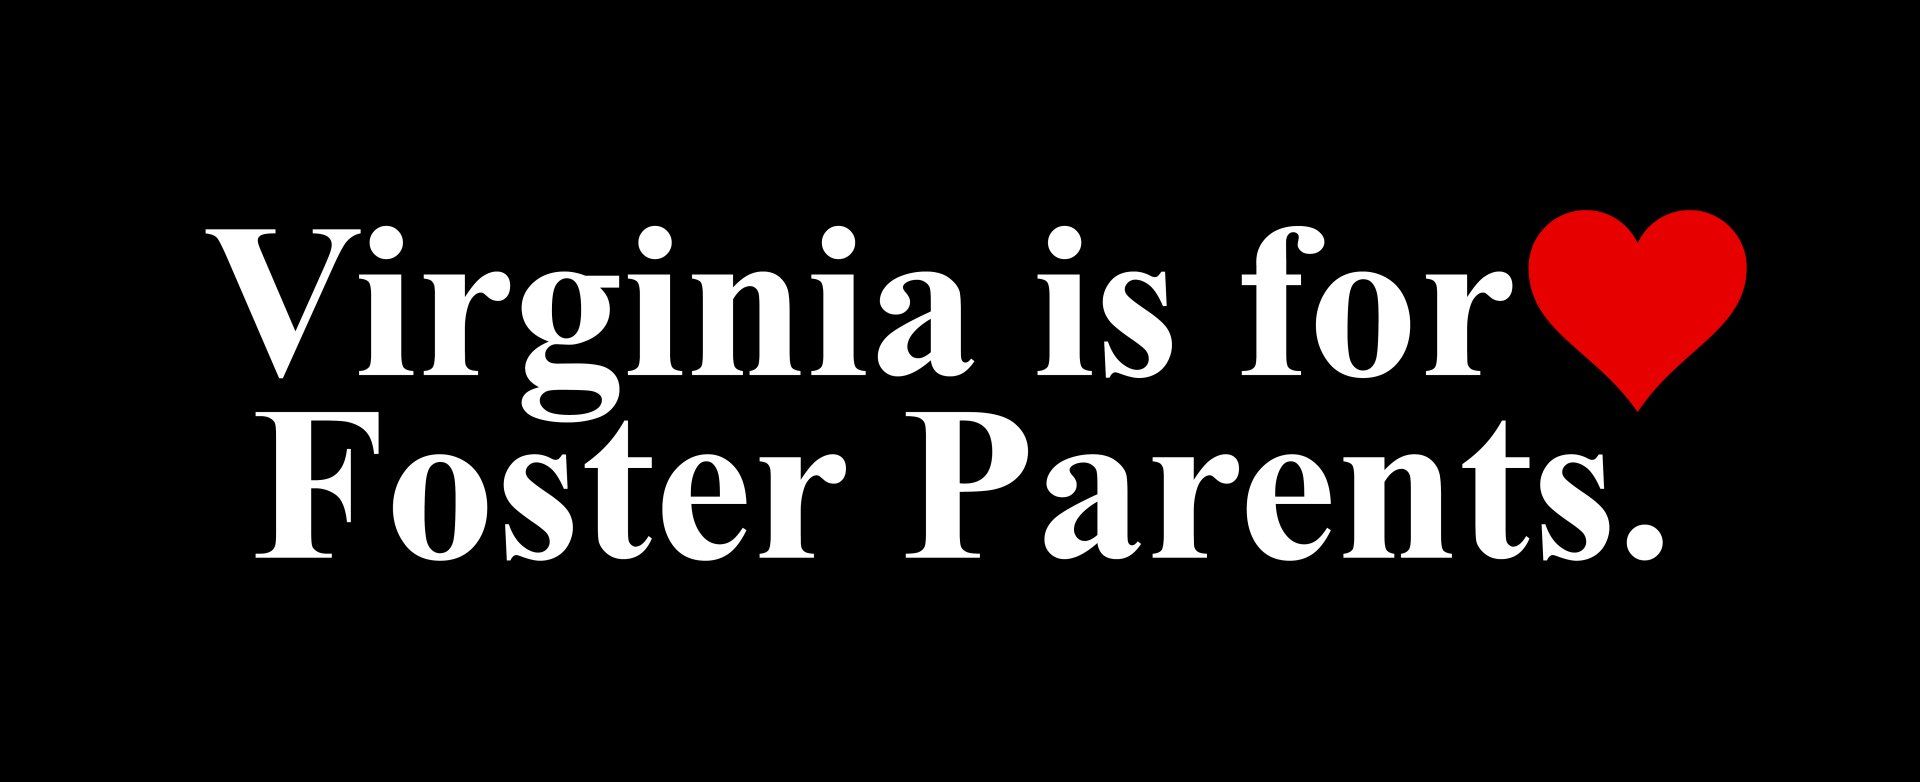 Virginia is for foster parents - FosterVA